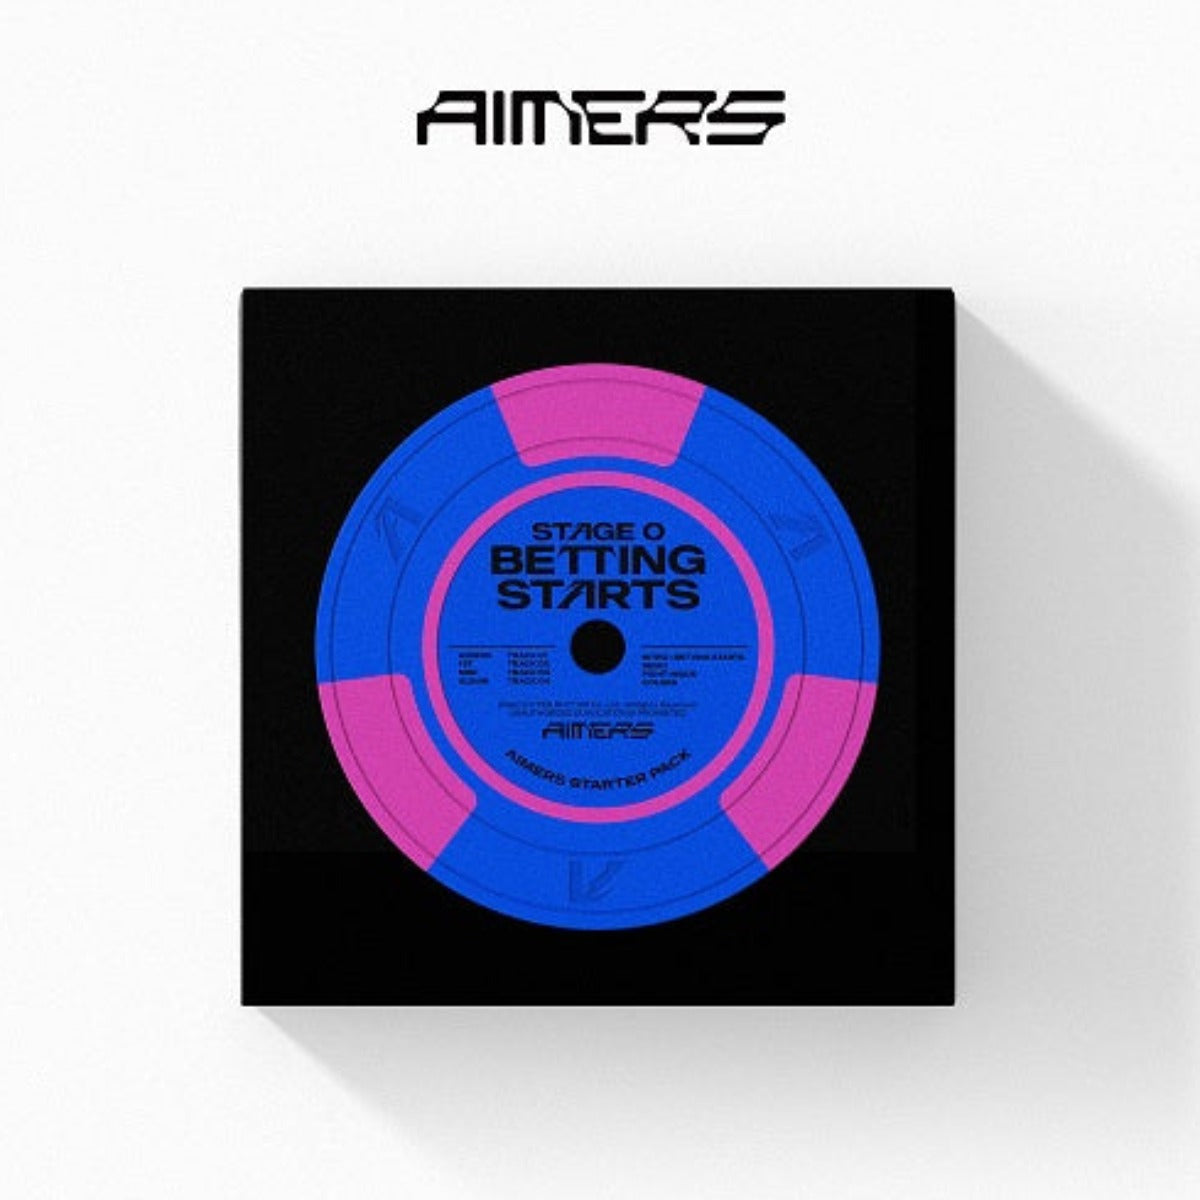 AIMERS Mini Album Vol. 1 - STAGE 0. BETTING STARTS